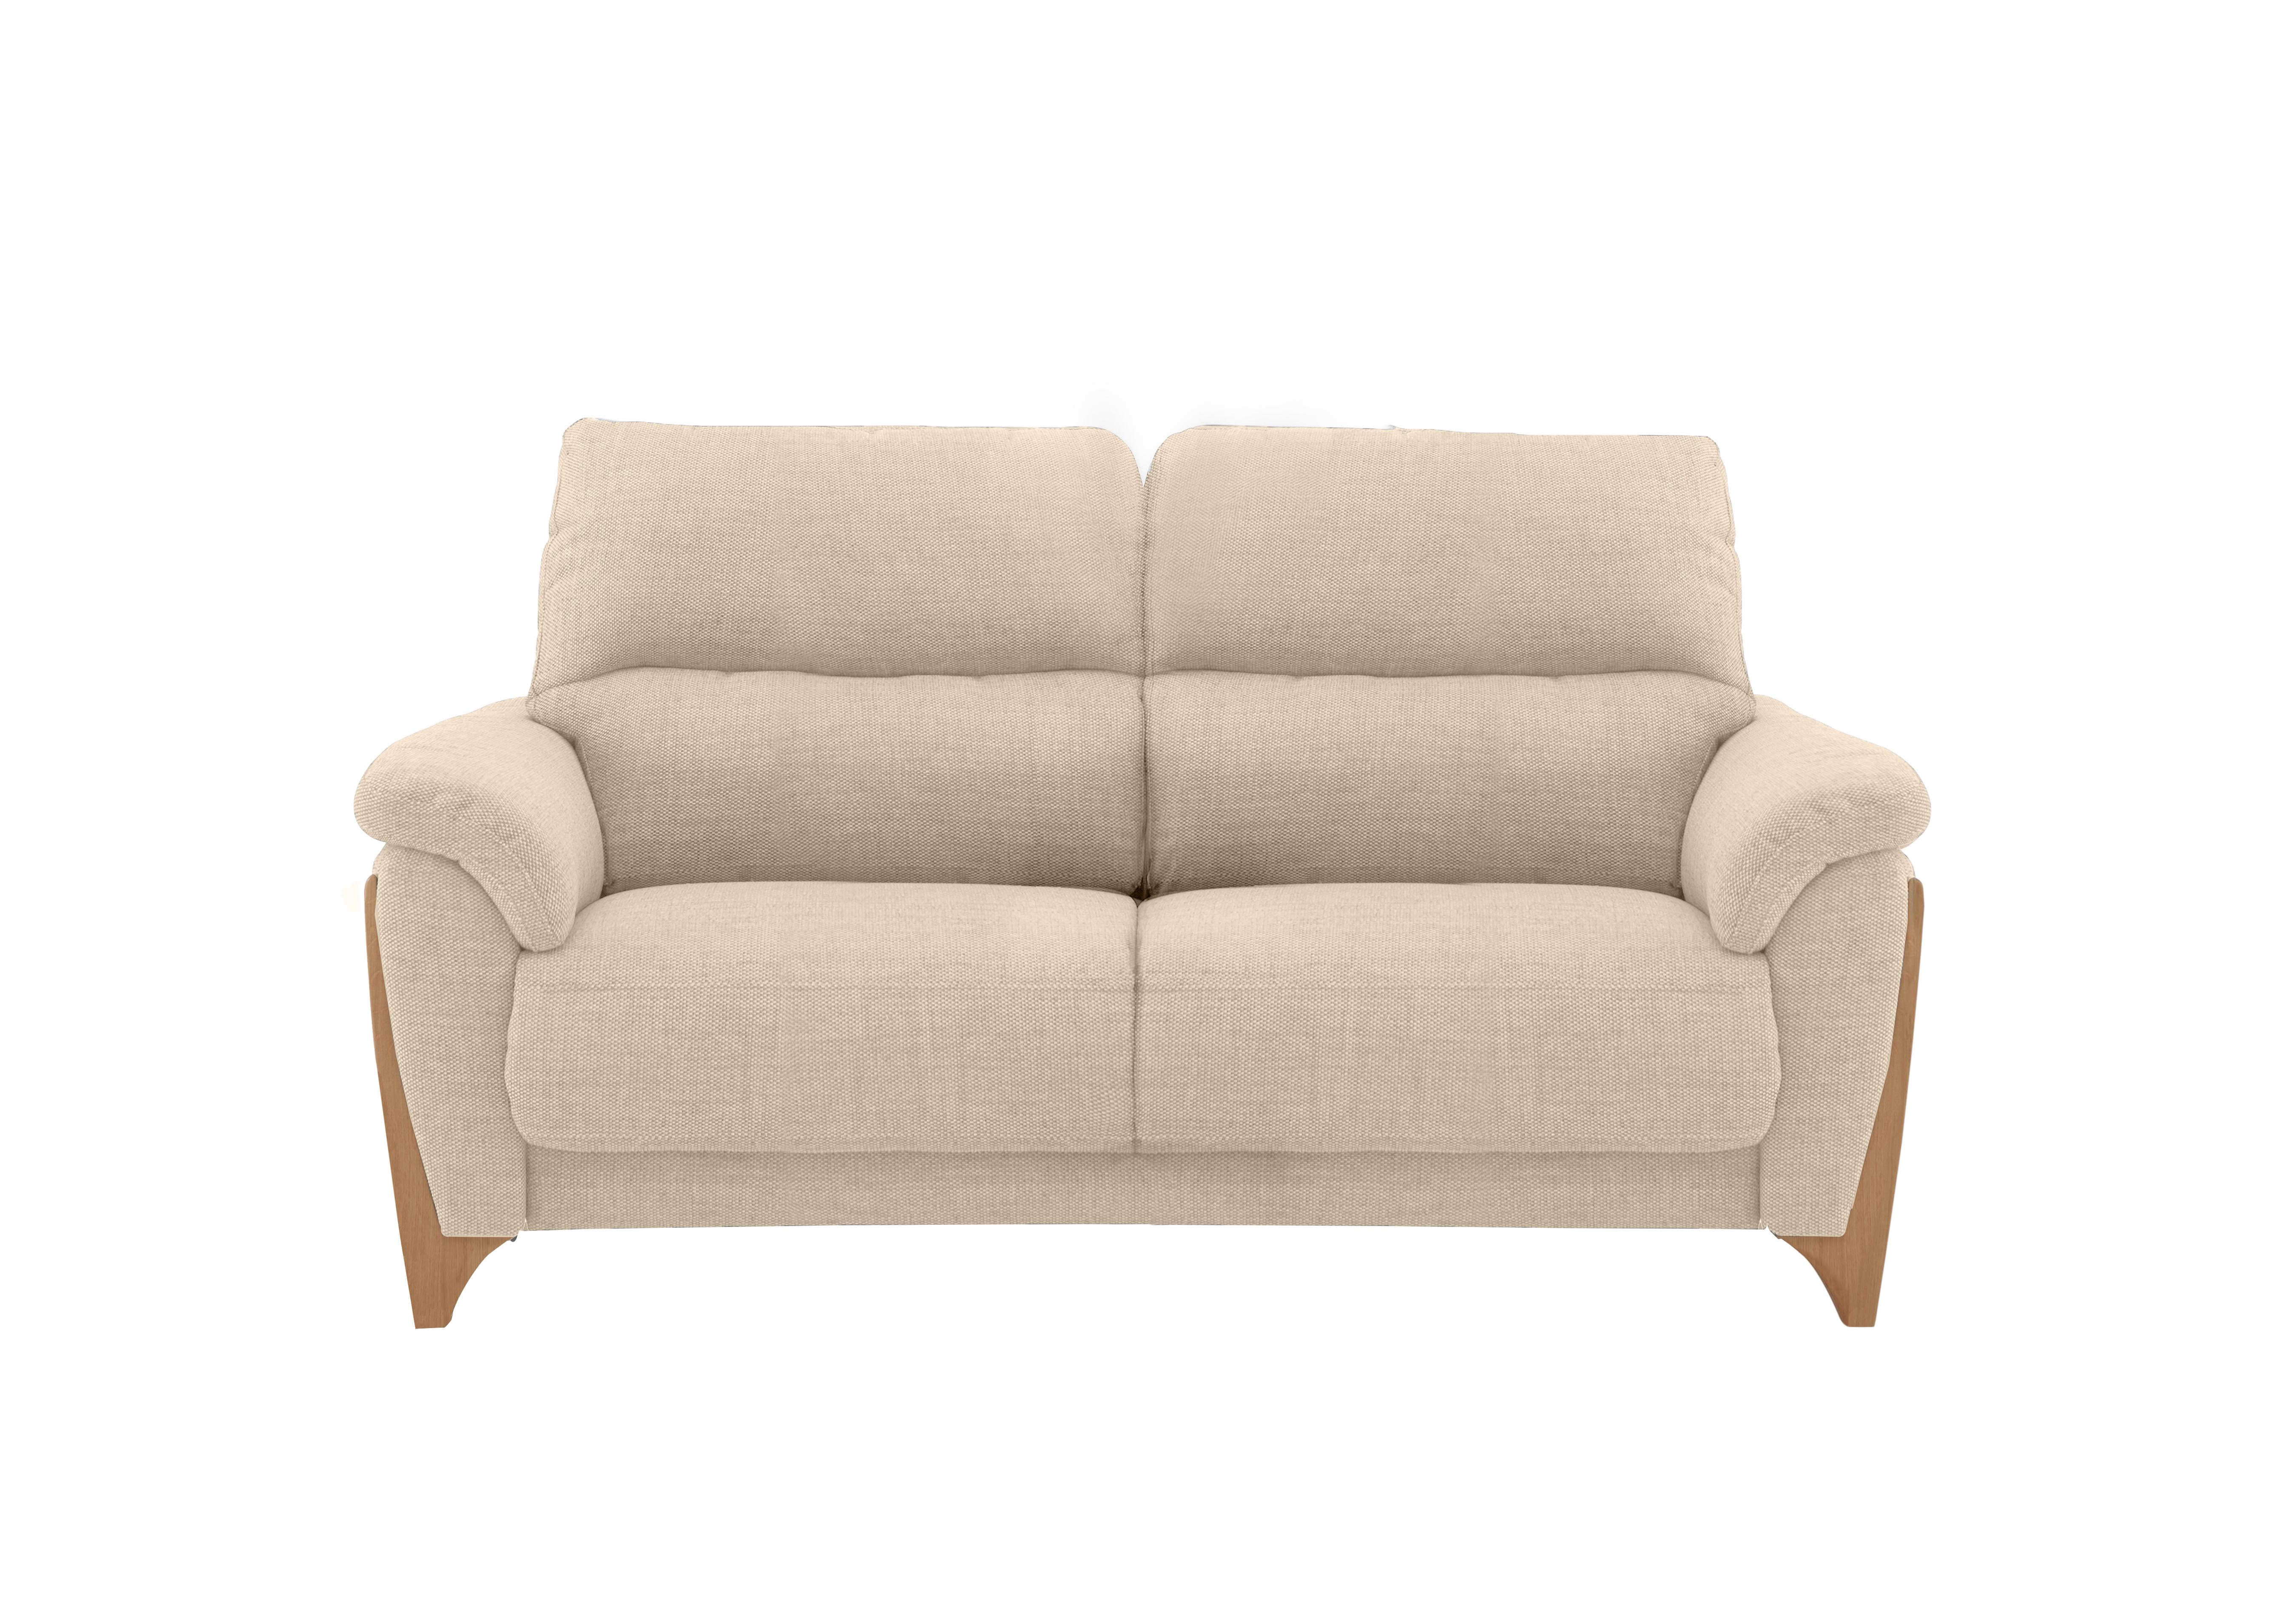 Enna Medium Fabric Sofa in P214 on Furniture Village